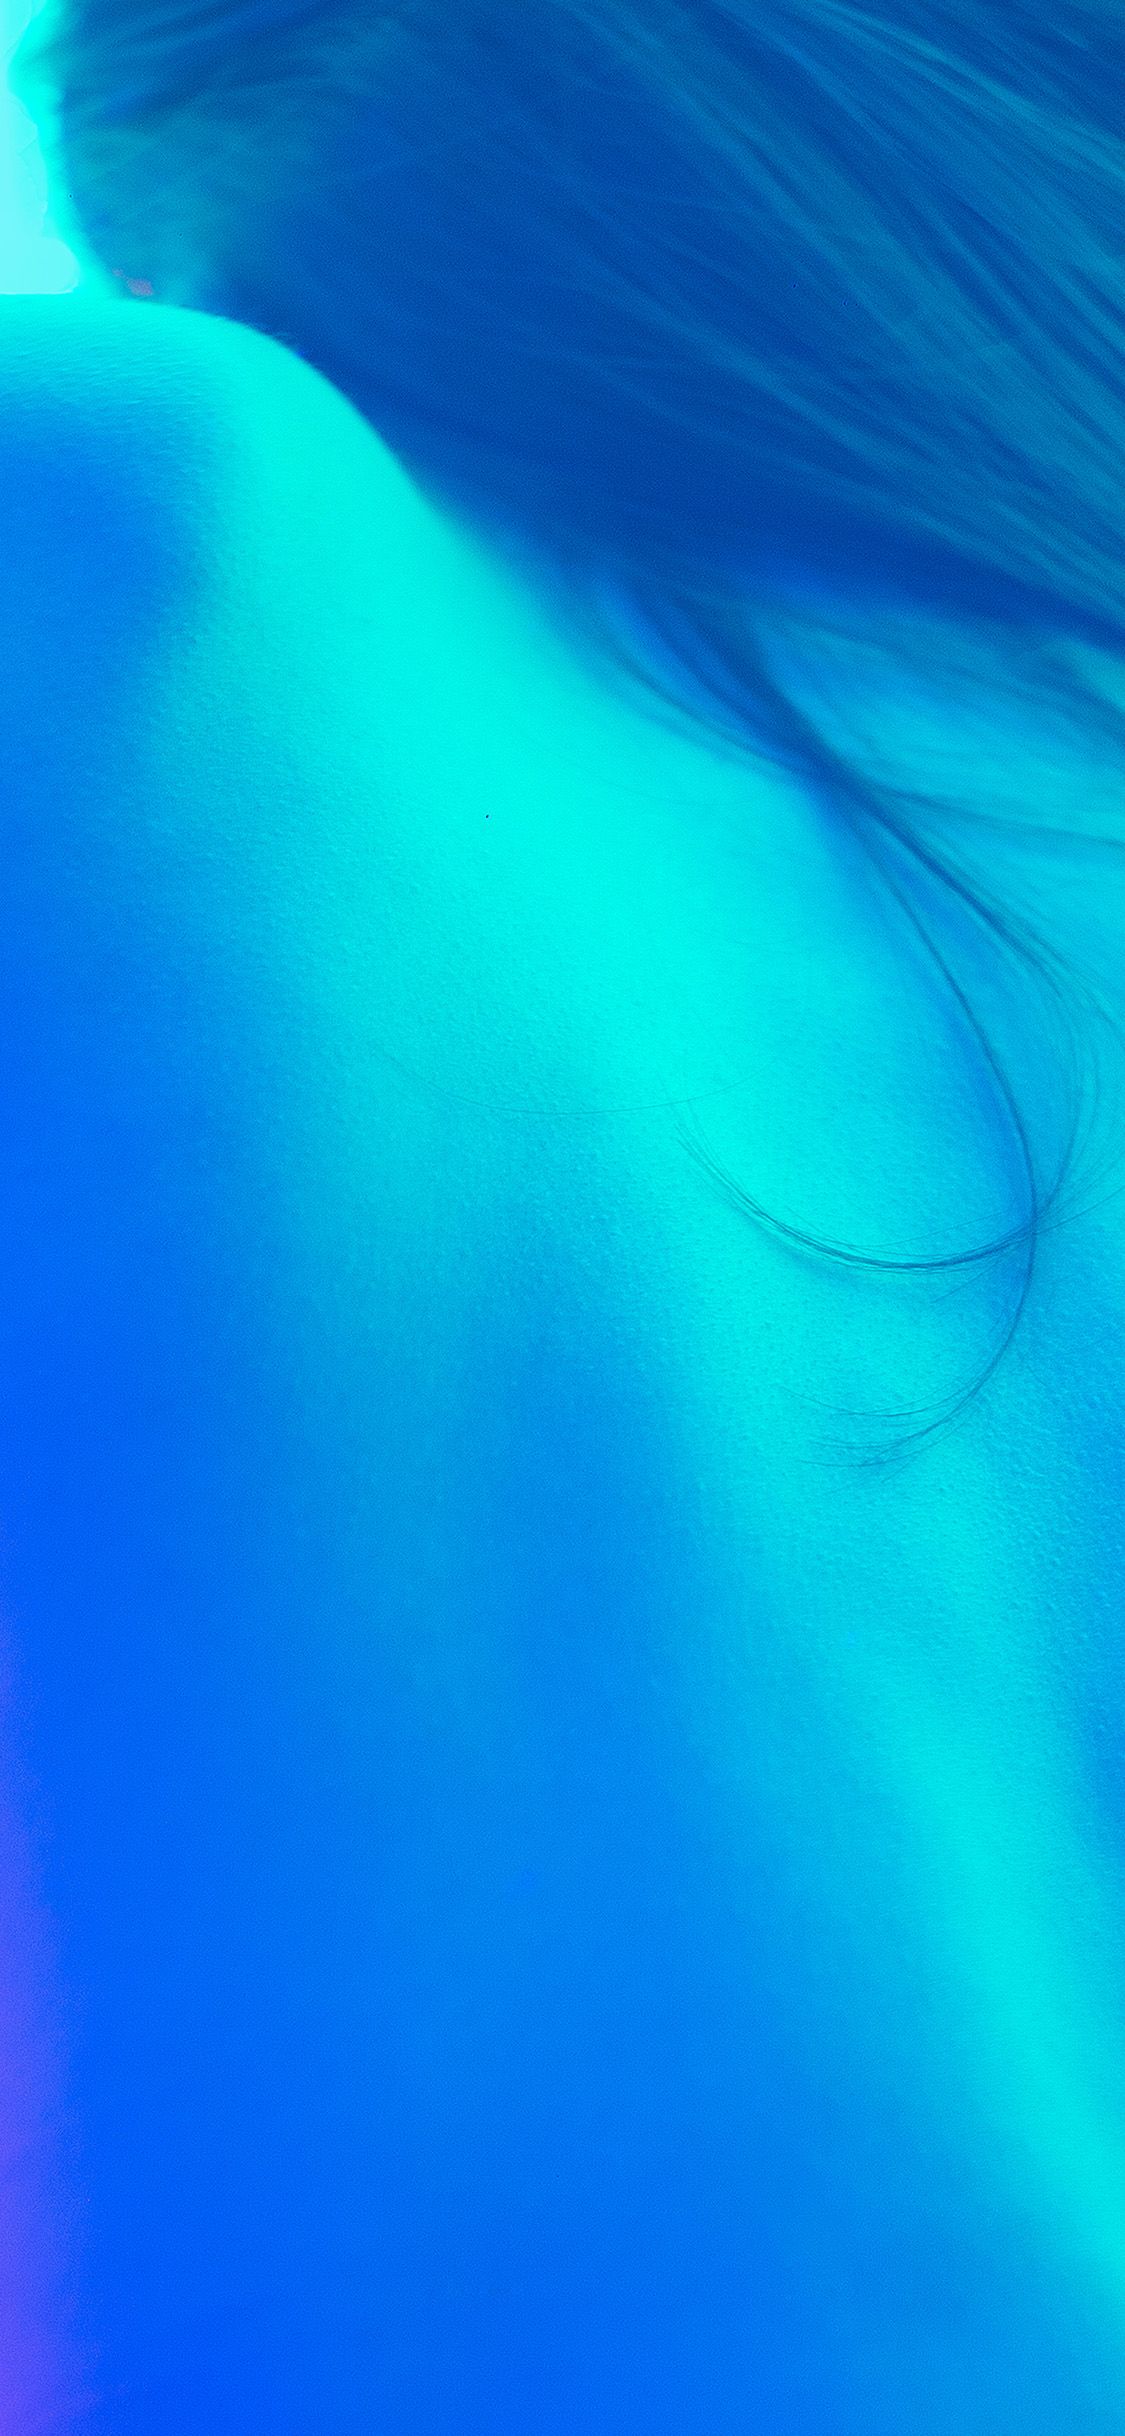 iPhone X wallpaper. neon body photo blue art